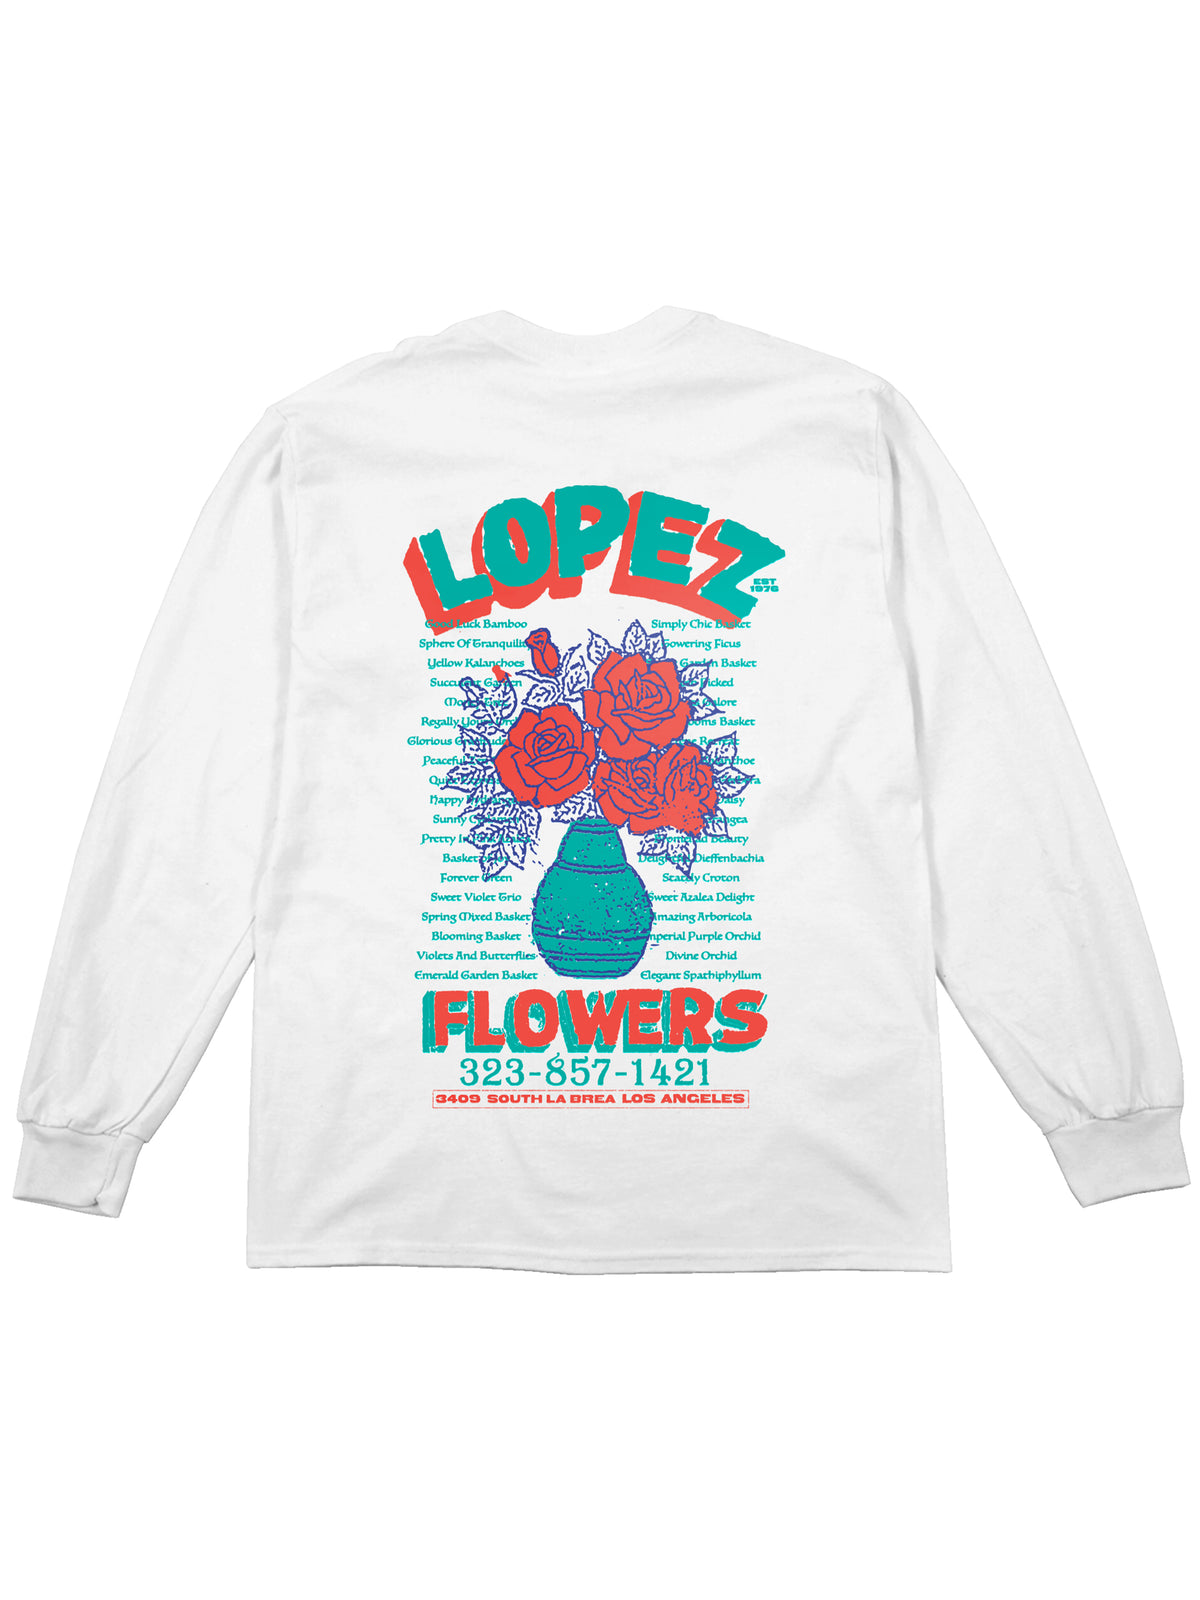 LOPEZ FLOWERS - L/S TEE - WHITE